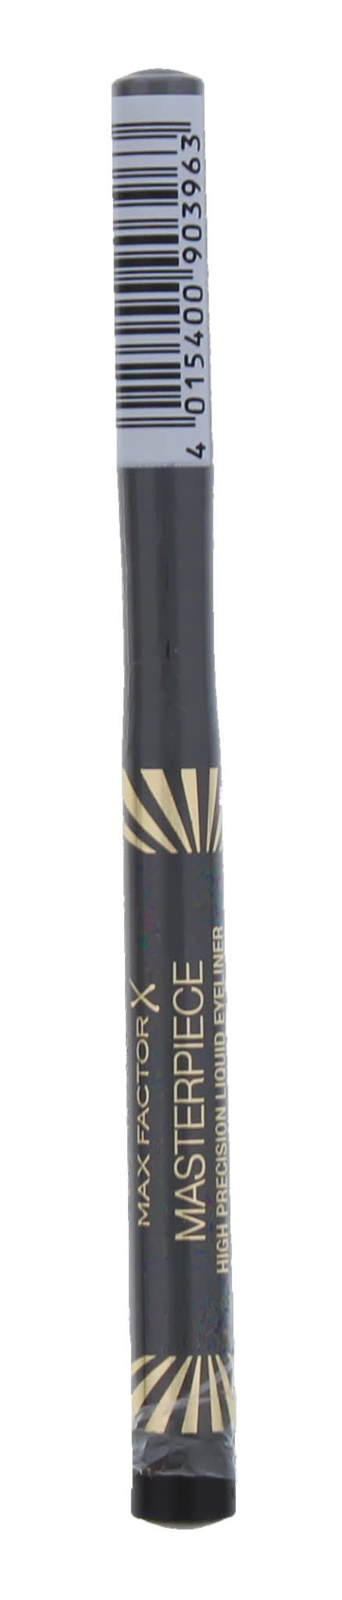 Max Factor: Masterpiece High Precision Liquid Eyeliner - Charcoal 15